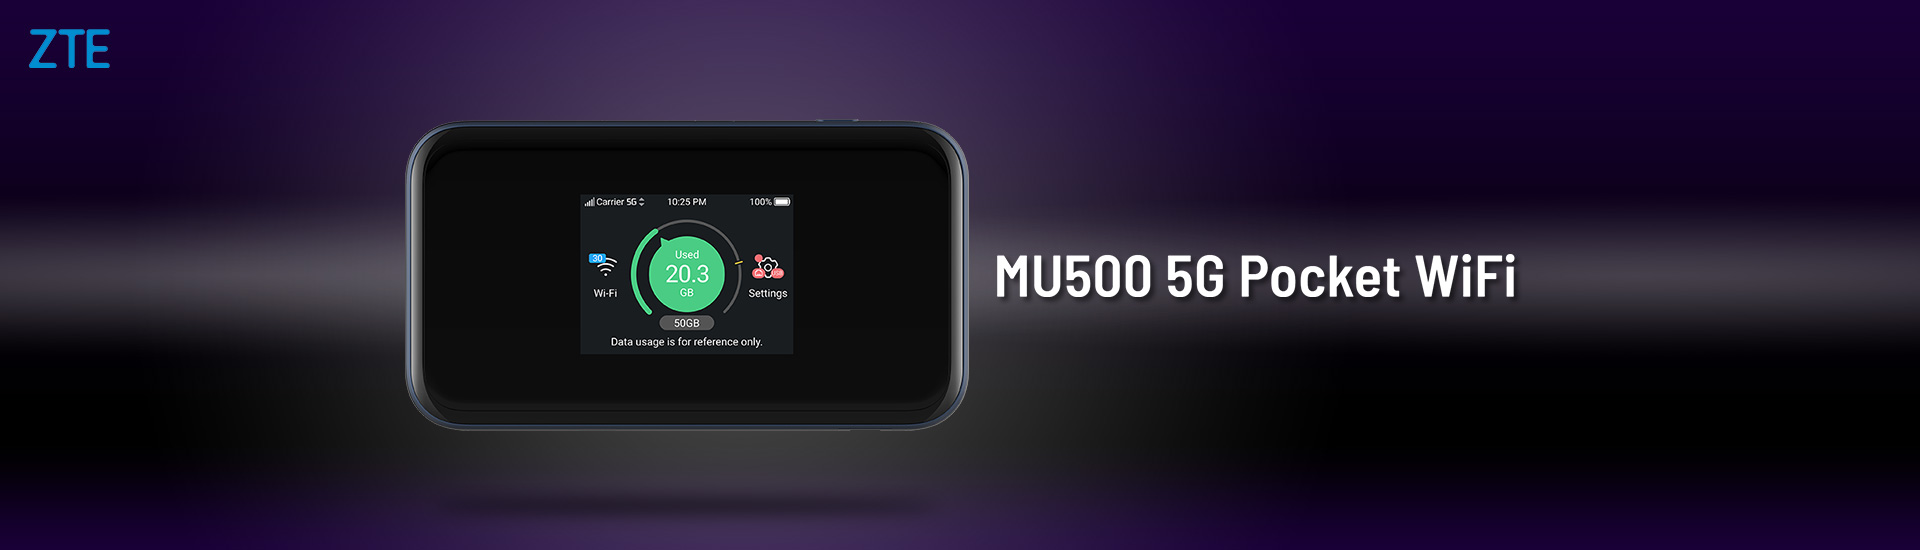 ZTE MU500 5G Pocket WiFi - Add-on $118/mth up upon 5G SIM Subscription